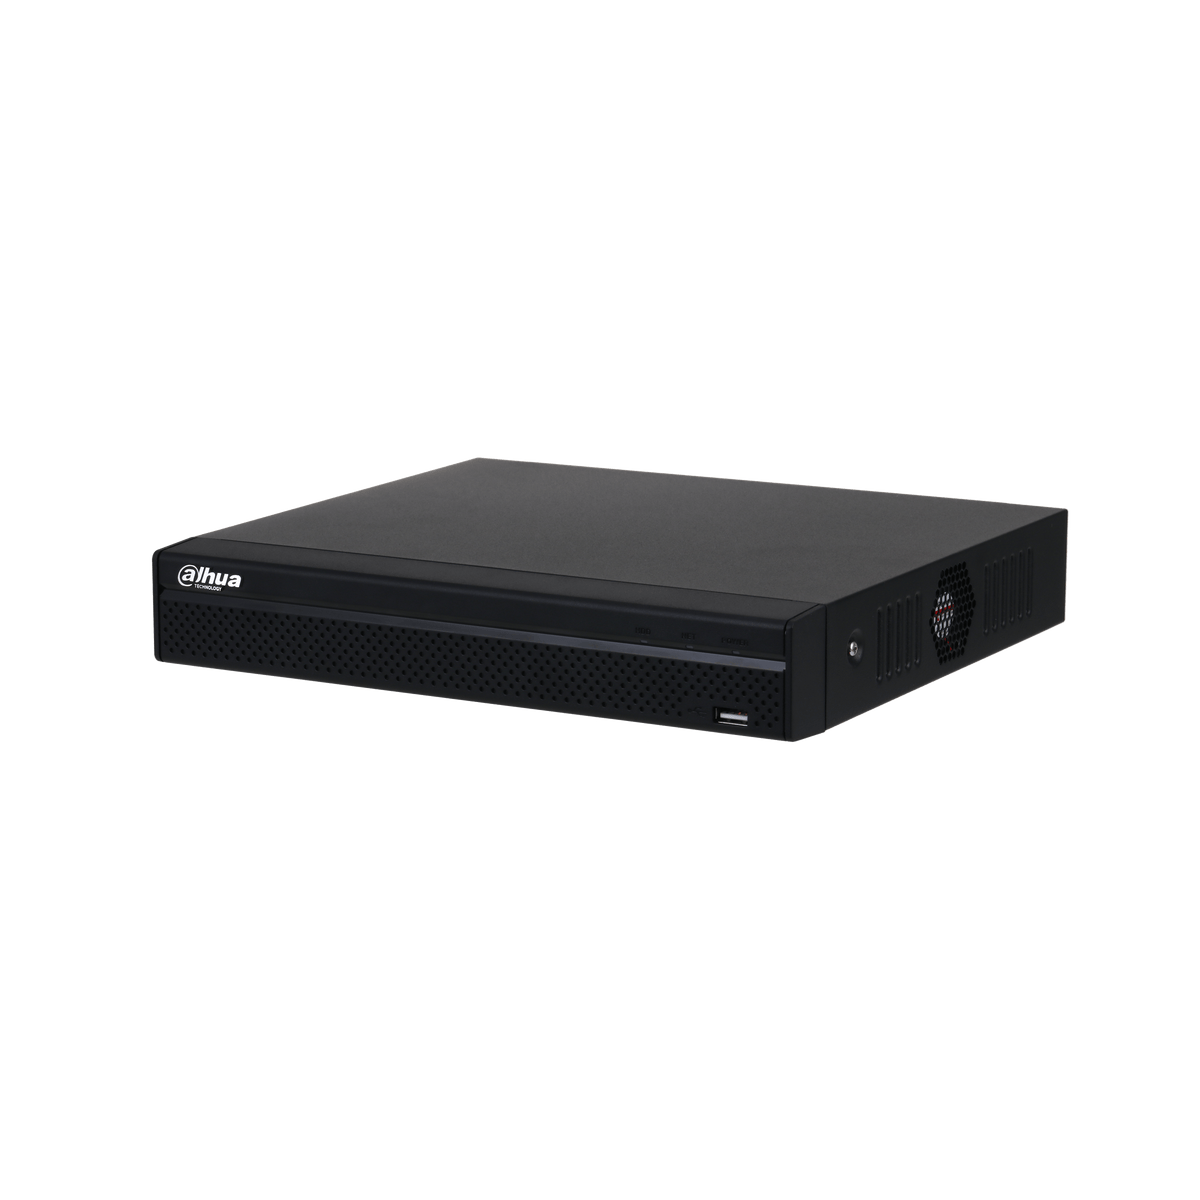 DAHUA NVR4108HS-P-4KS2/L 8 Channel Compact 1U 1HDD 4PoE Network Video Recorder